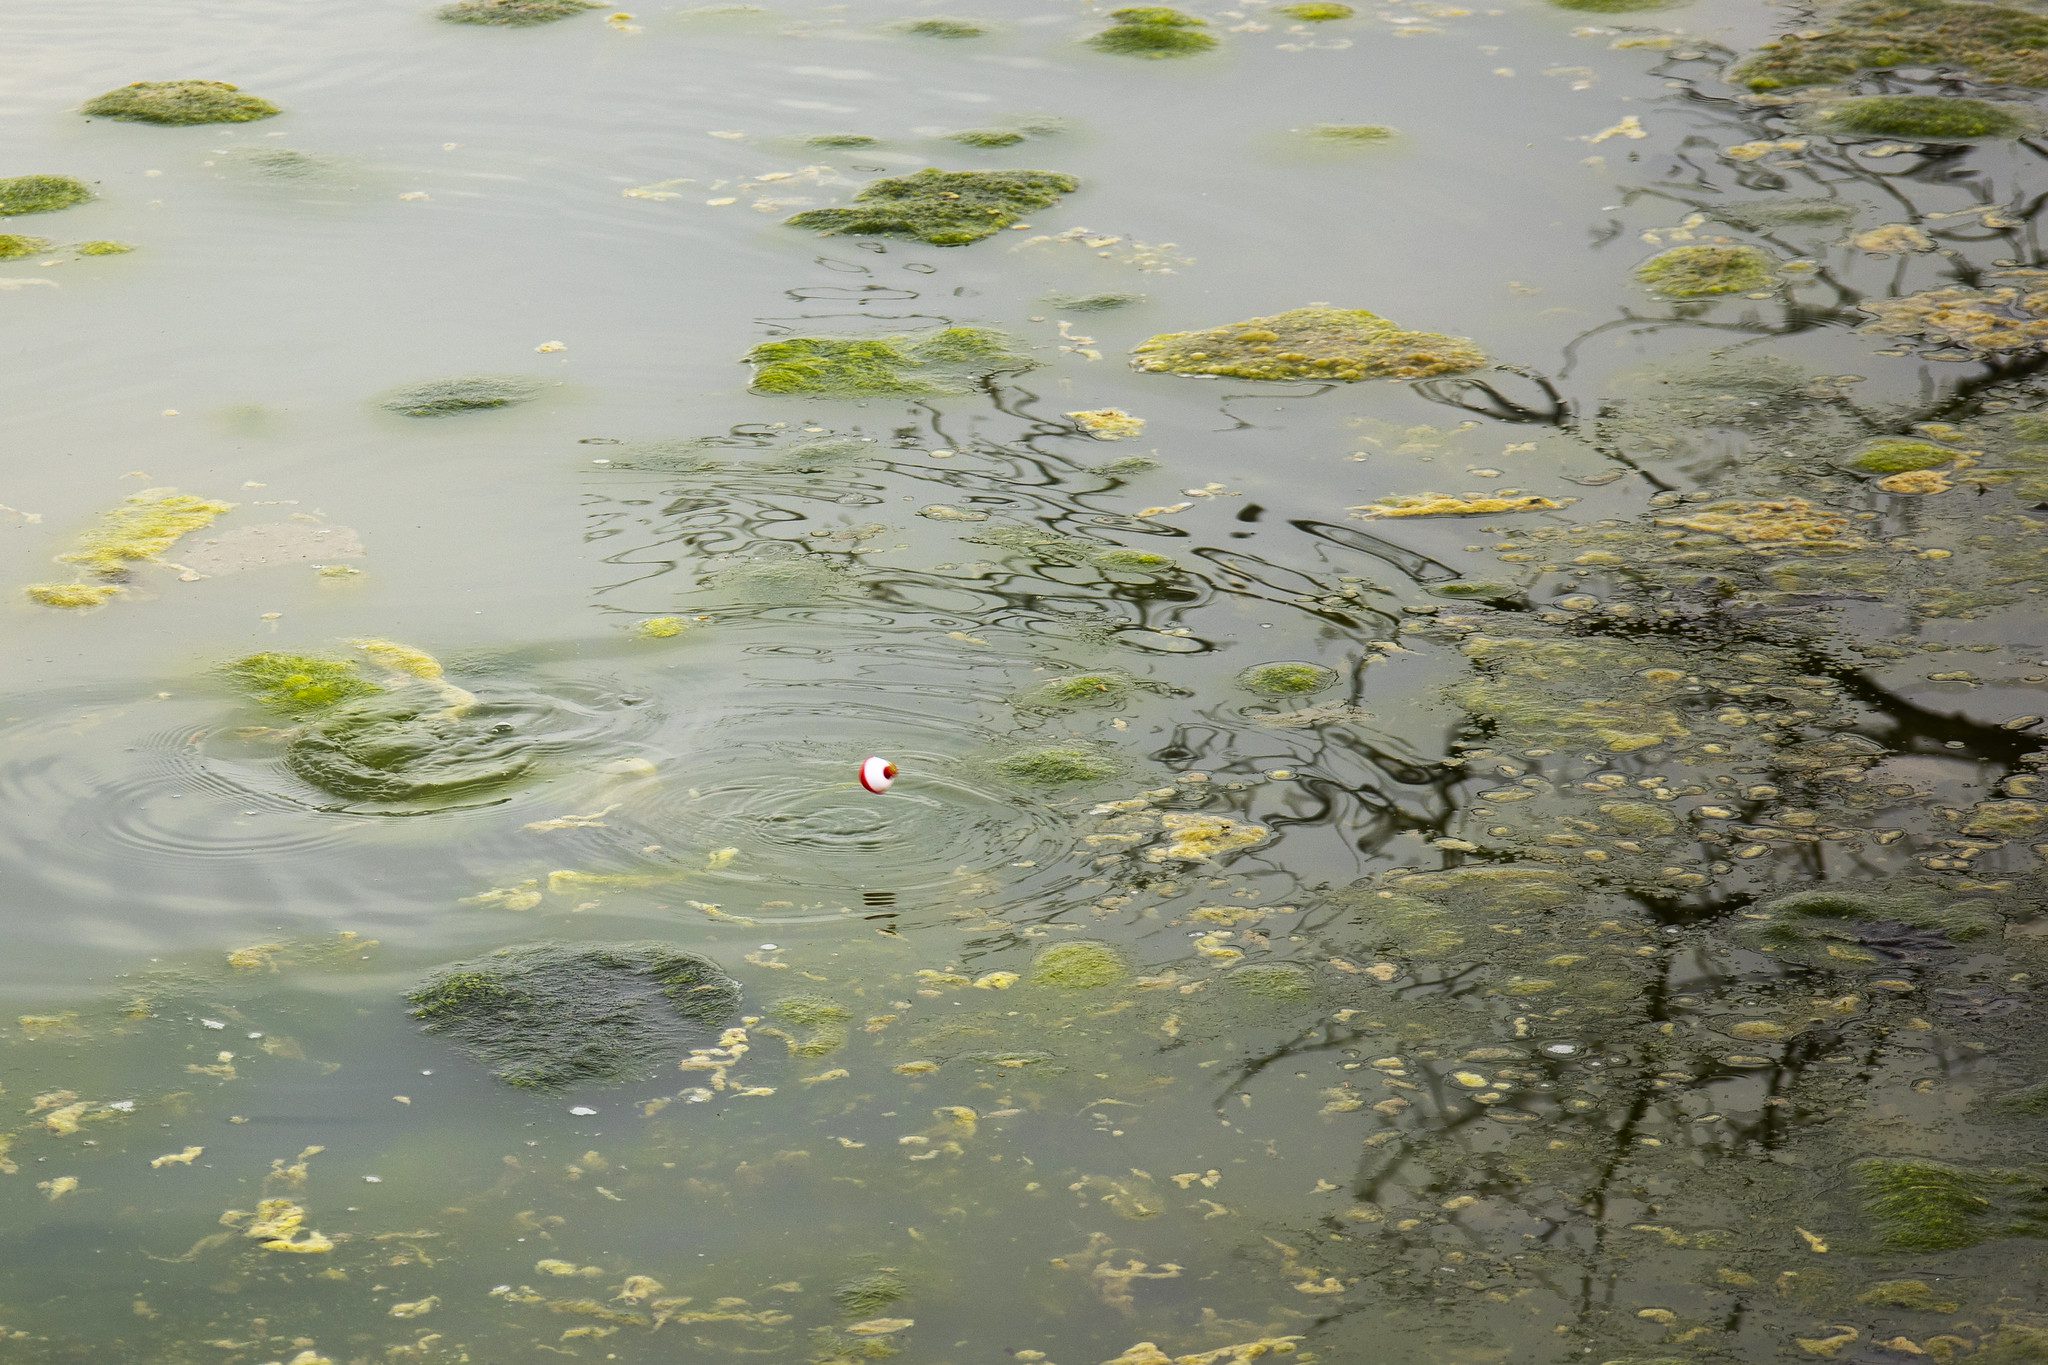 Spring Algae Bloom on Pond